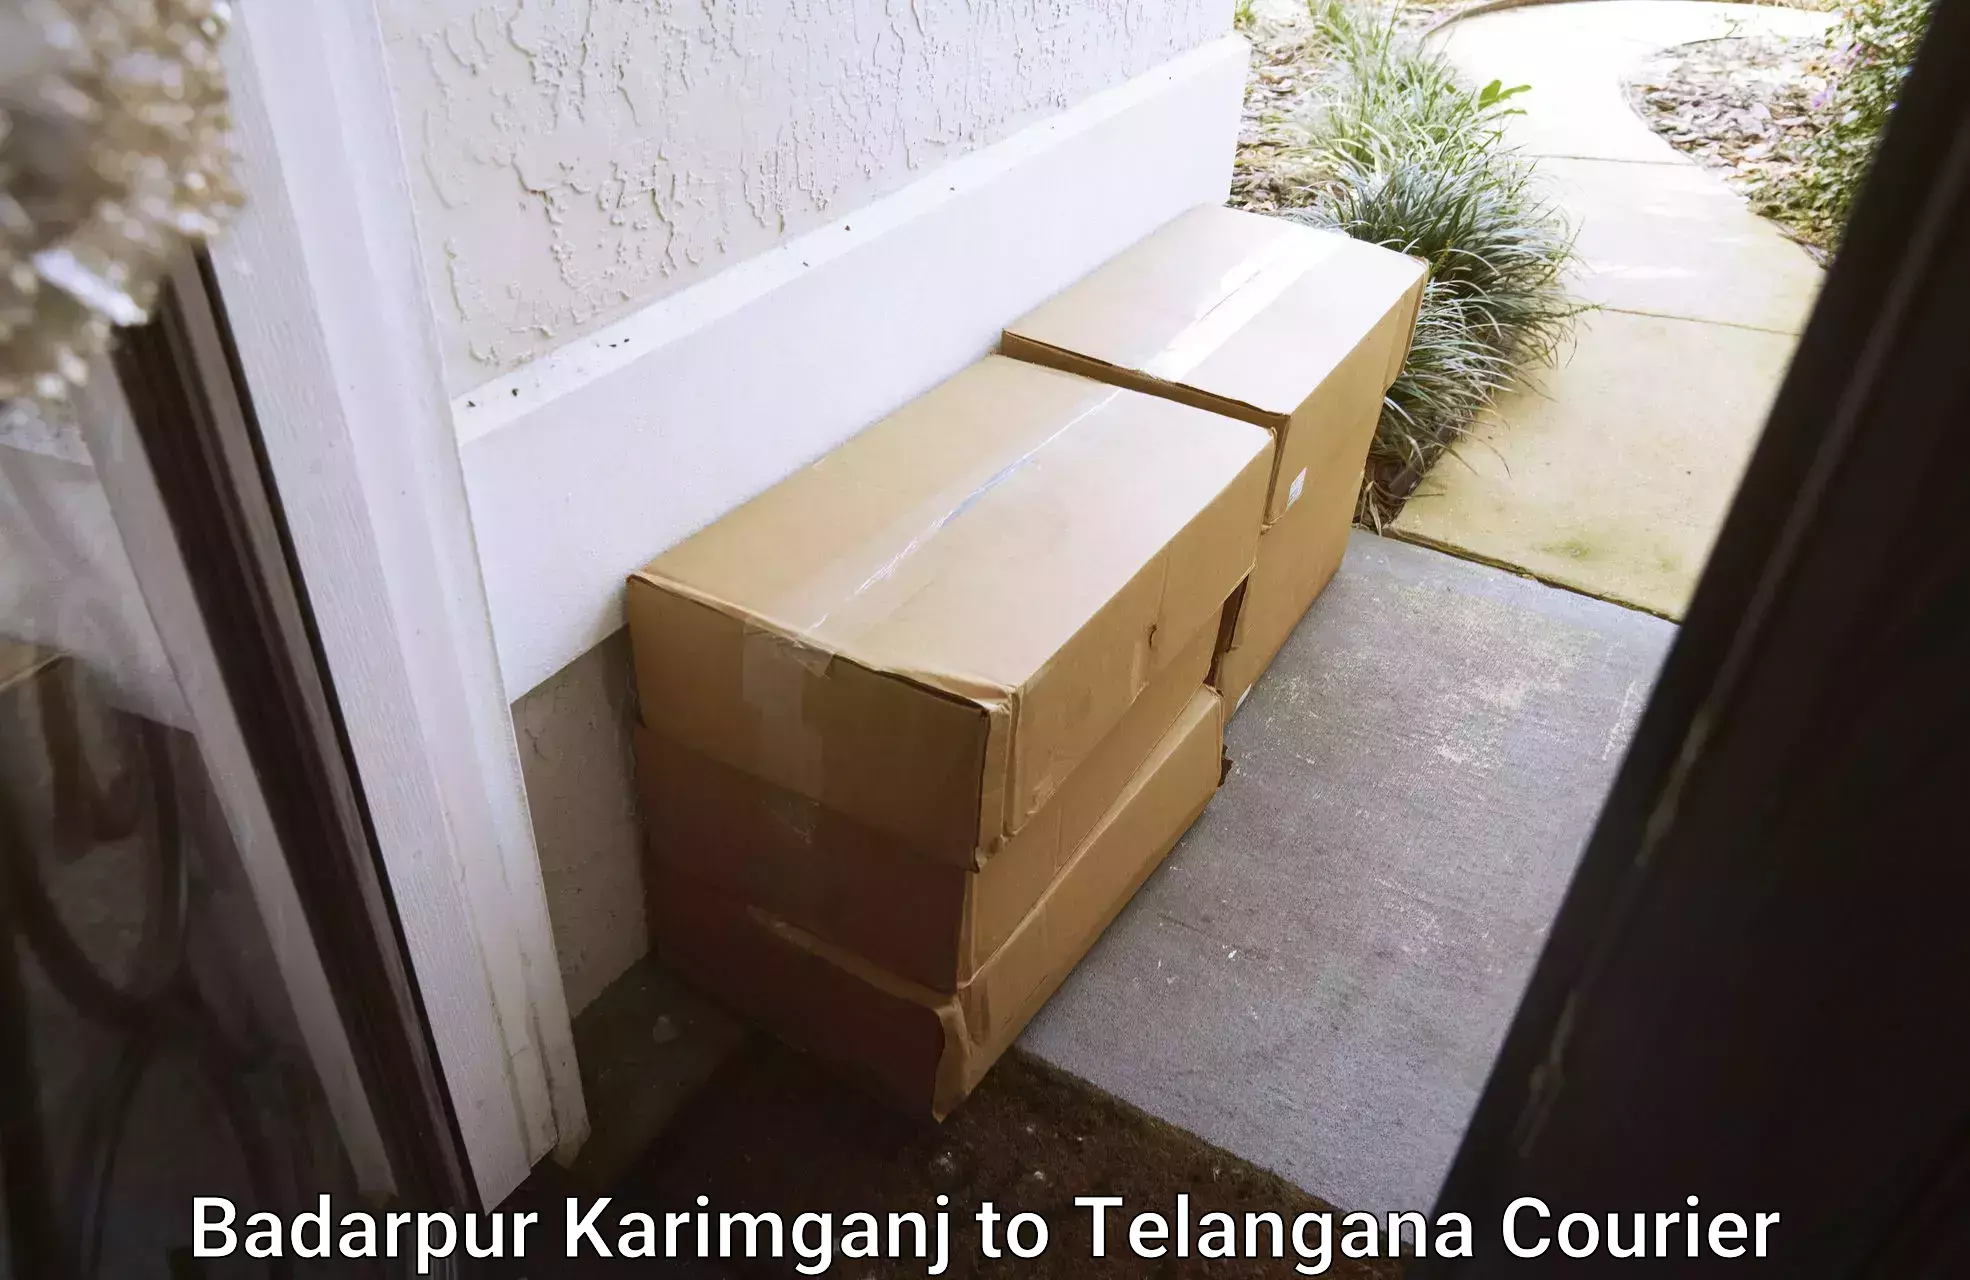 Personal courier services Badarpur Karimganj to Bhuvanagiri